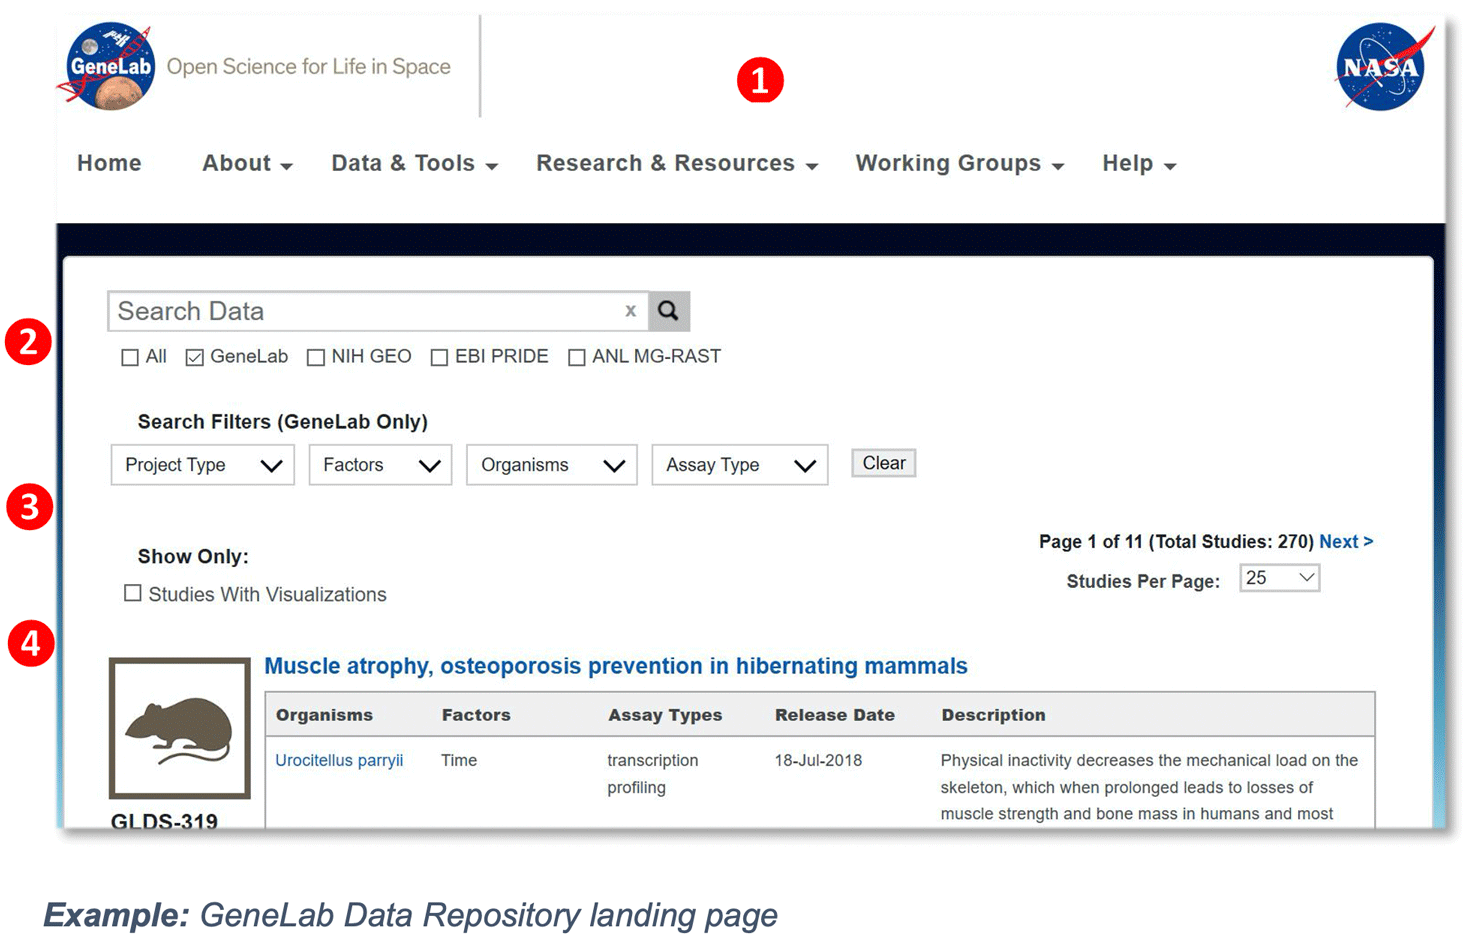 Example: GeneLab Data Repository landing page